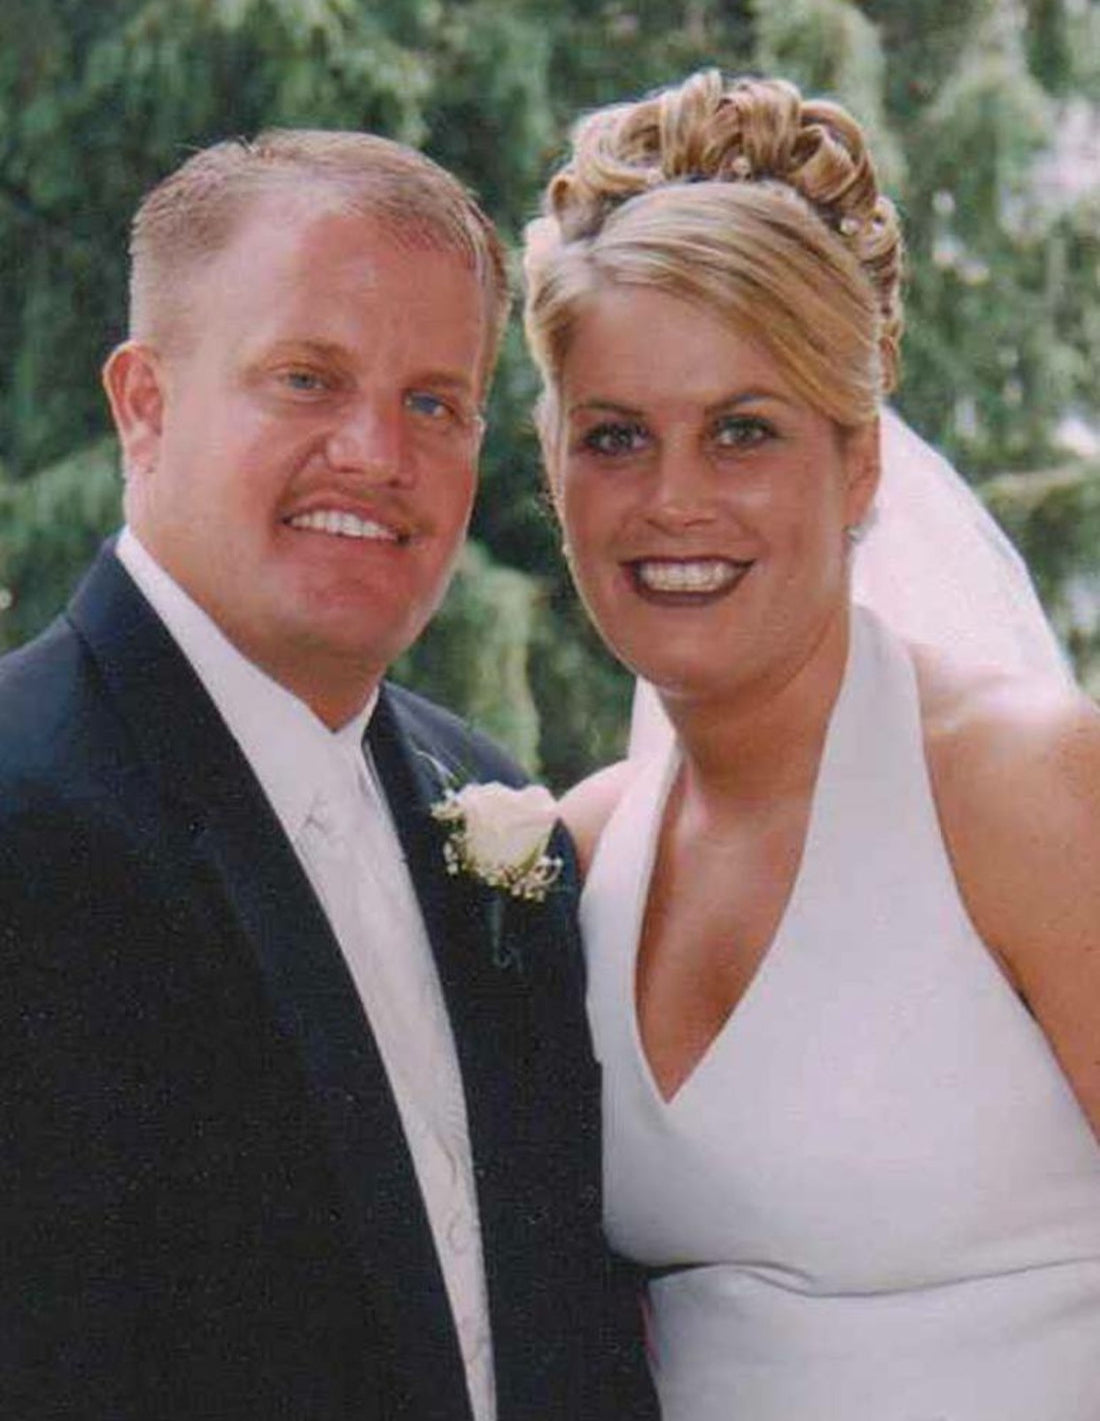 May 22, 2004/Wedding day of Terry & MaryJo